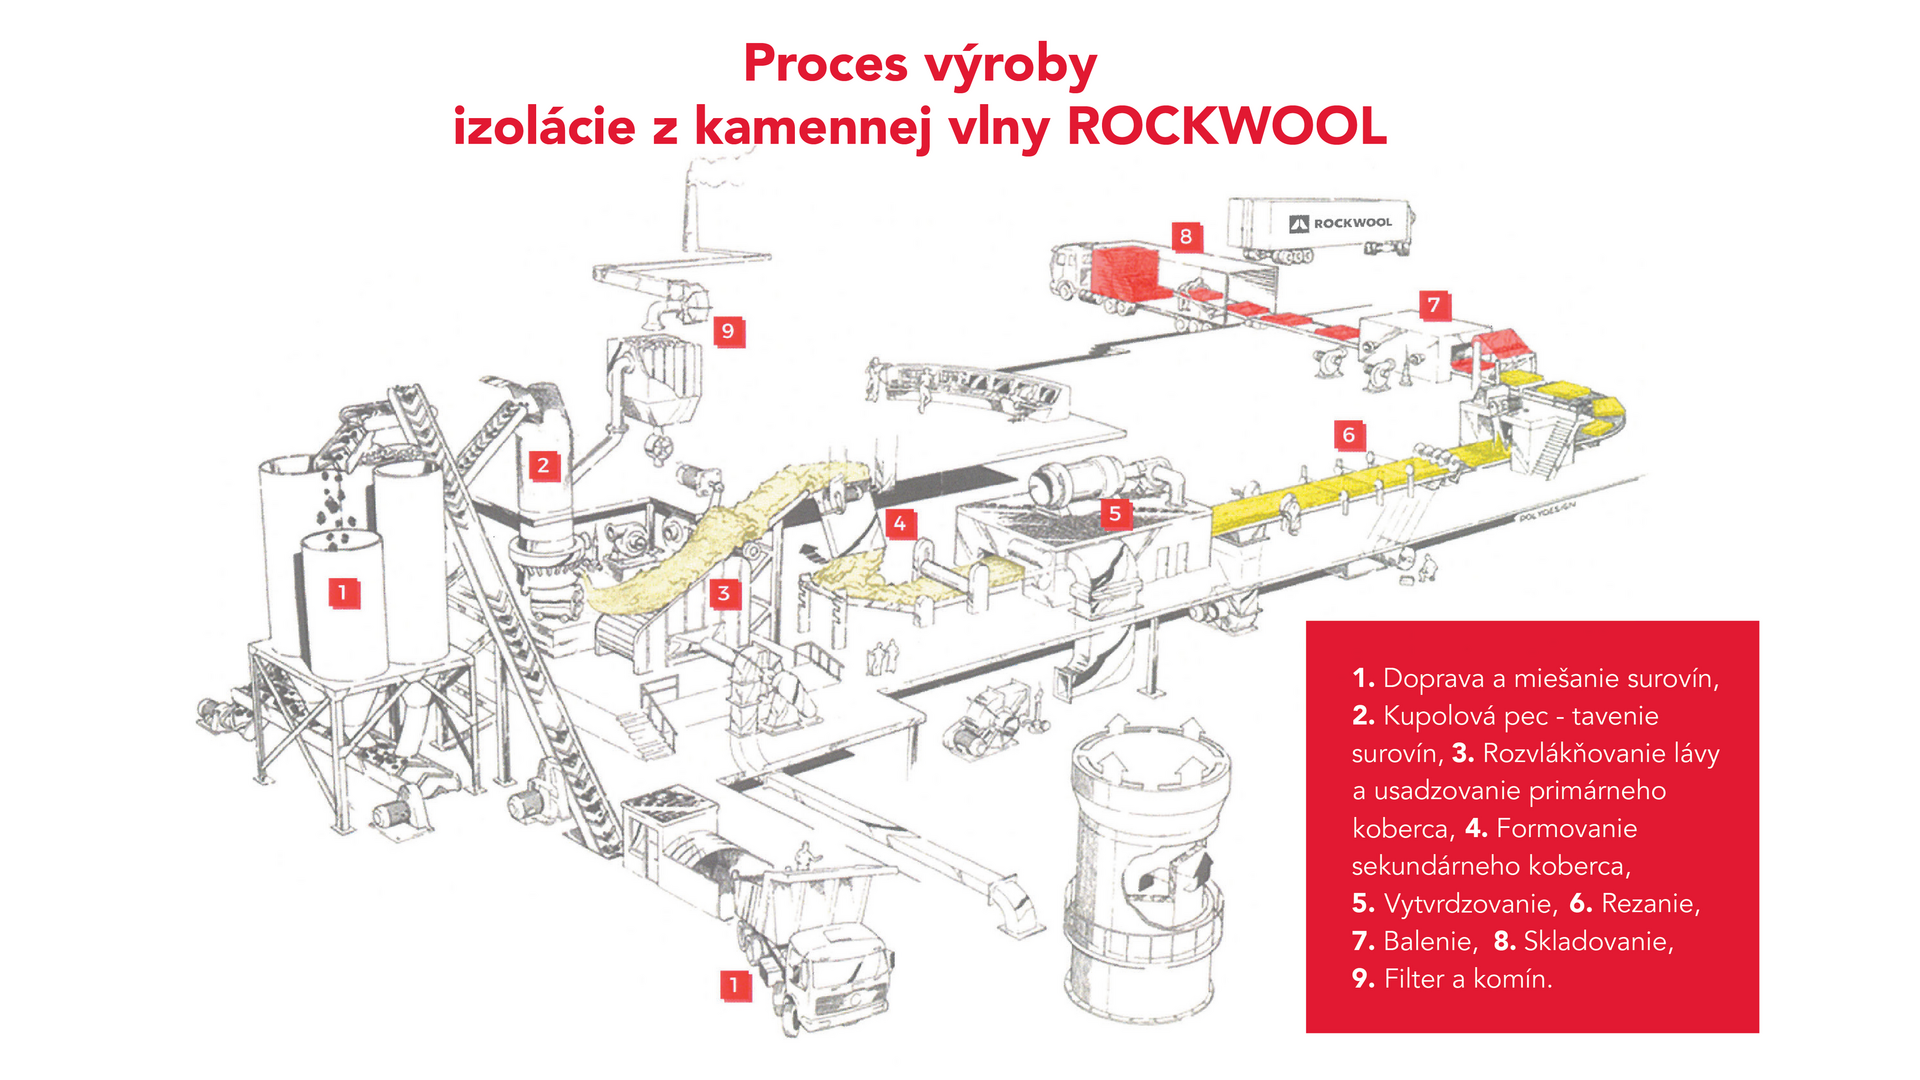 Proces vyroby izolacie z kamennej vlny ROCKWOOL